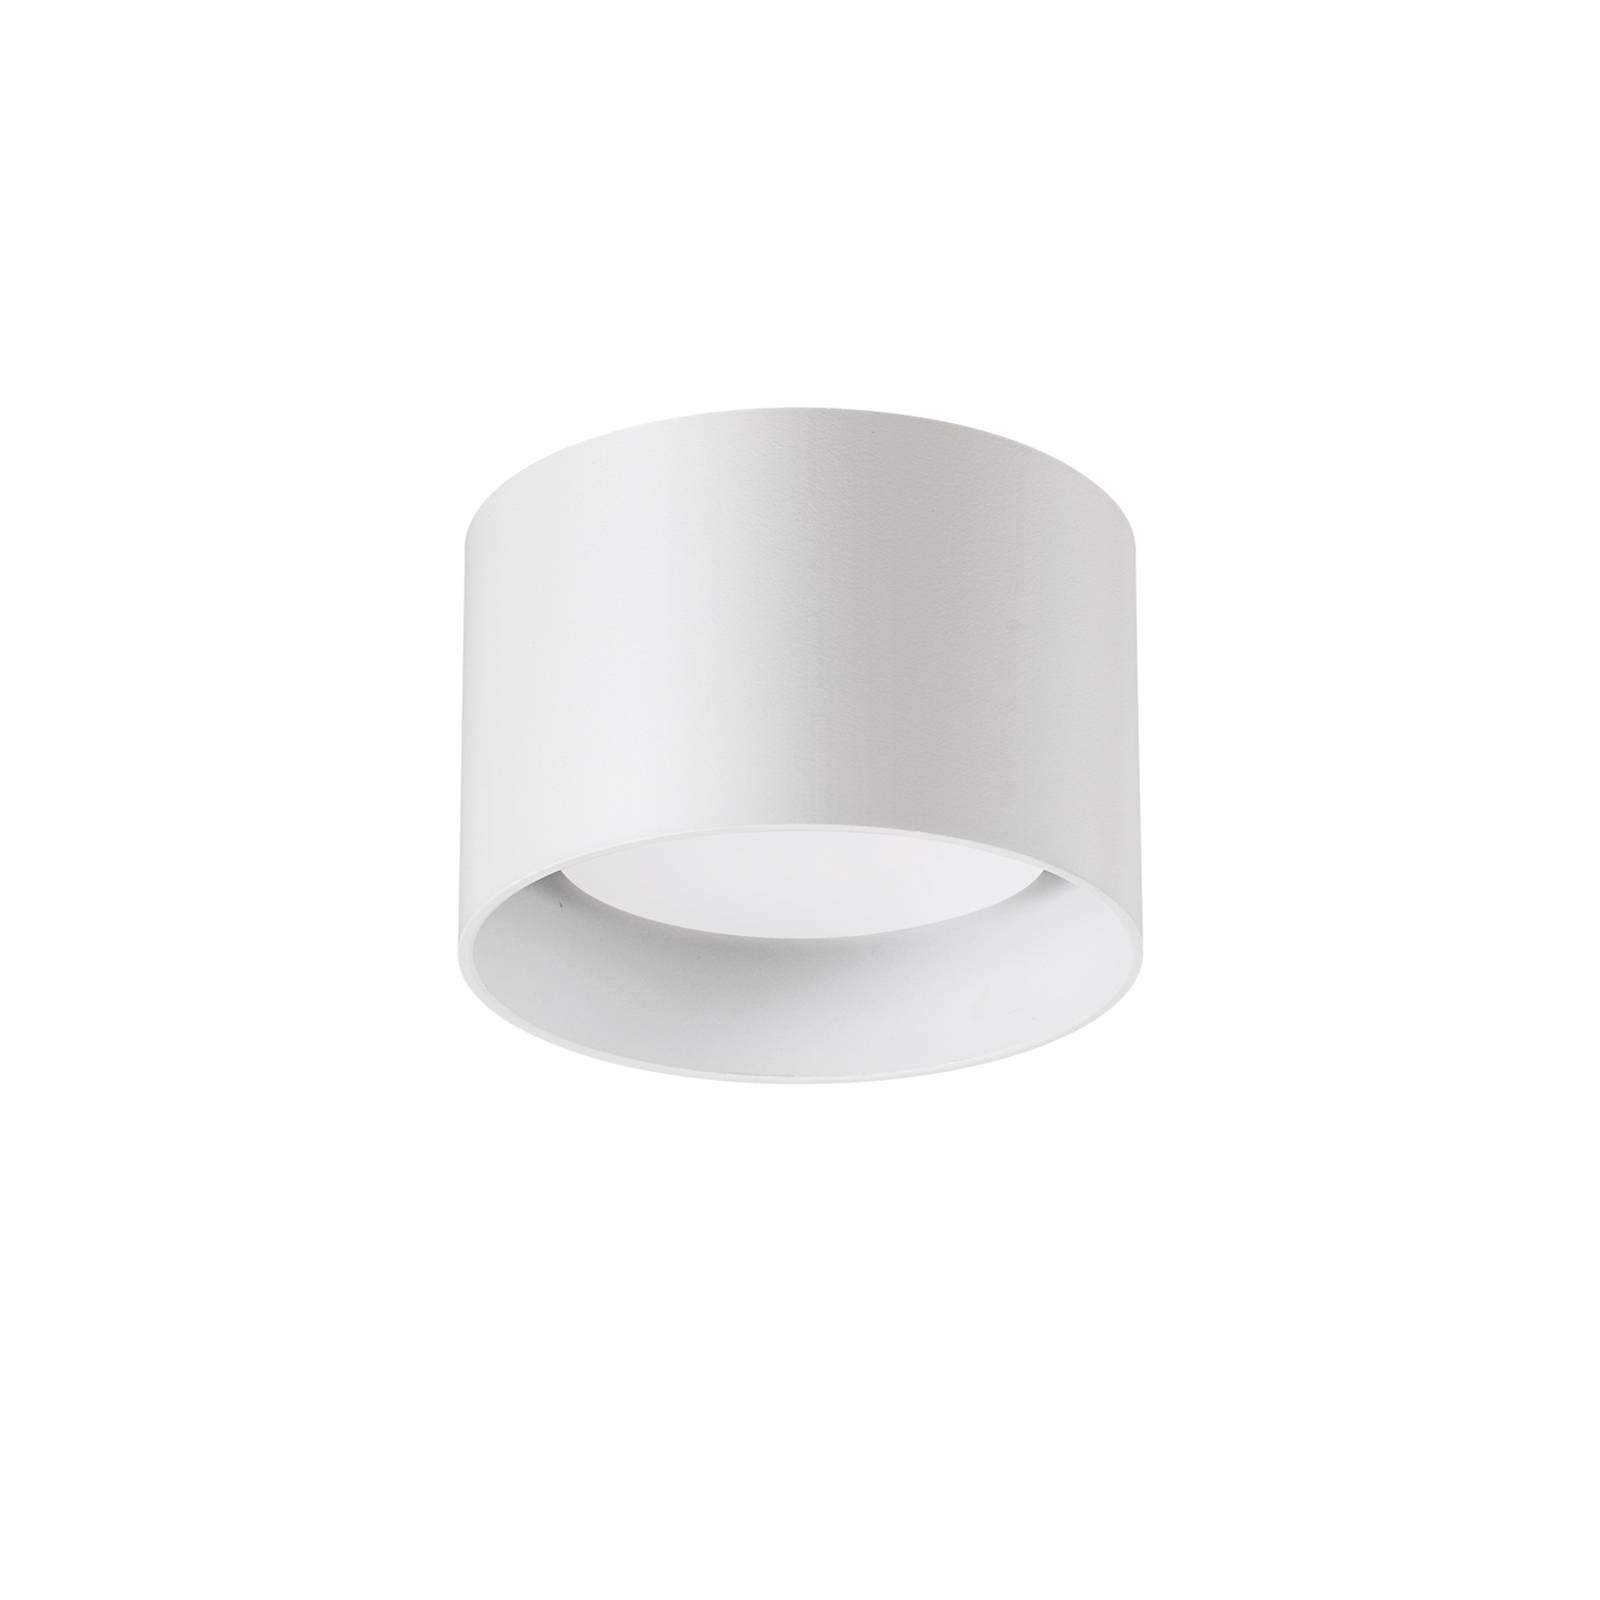 Ideallux Ideal Lux Spike stropné svietidlo biela, Obývacia izba / jedáleň, hliník, GX53, 9.5W, K: 6.5cm